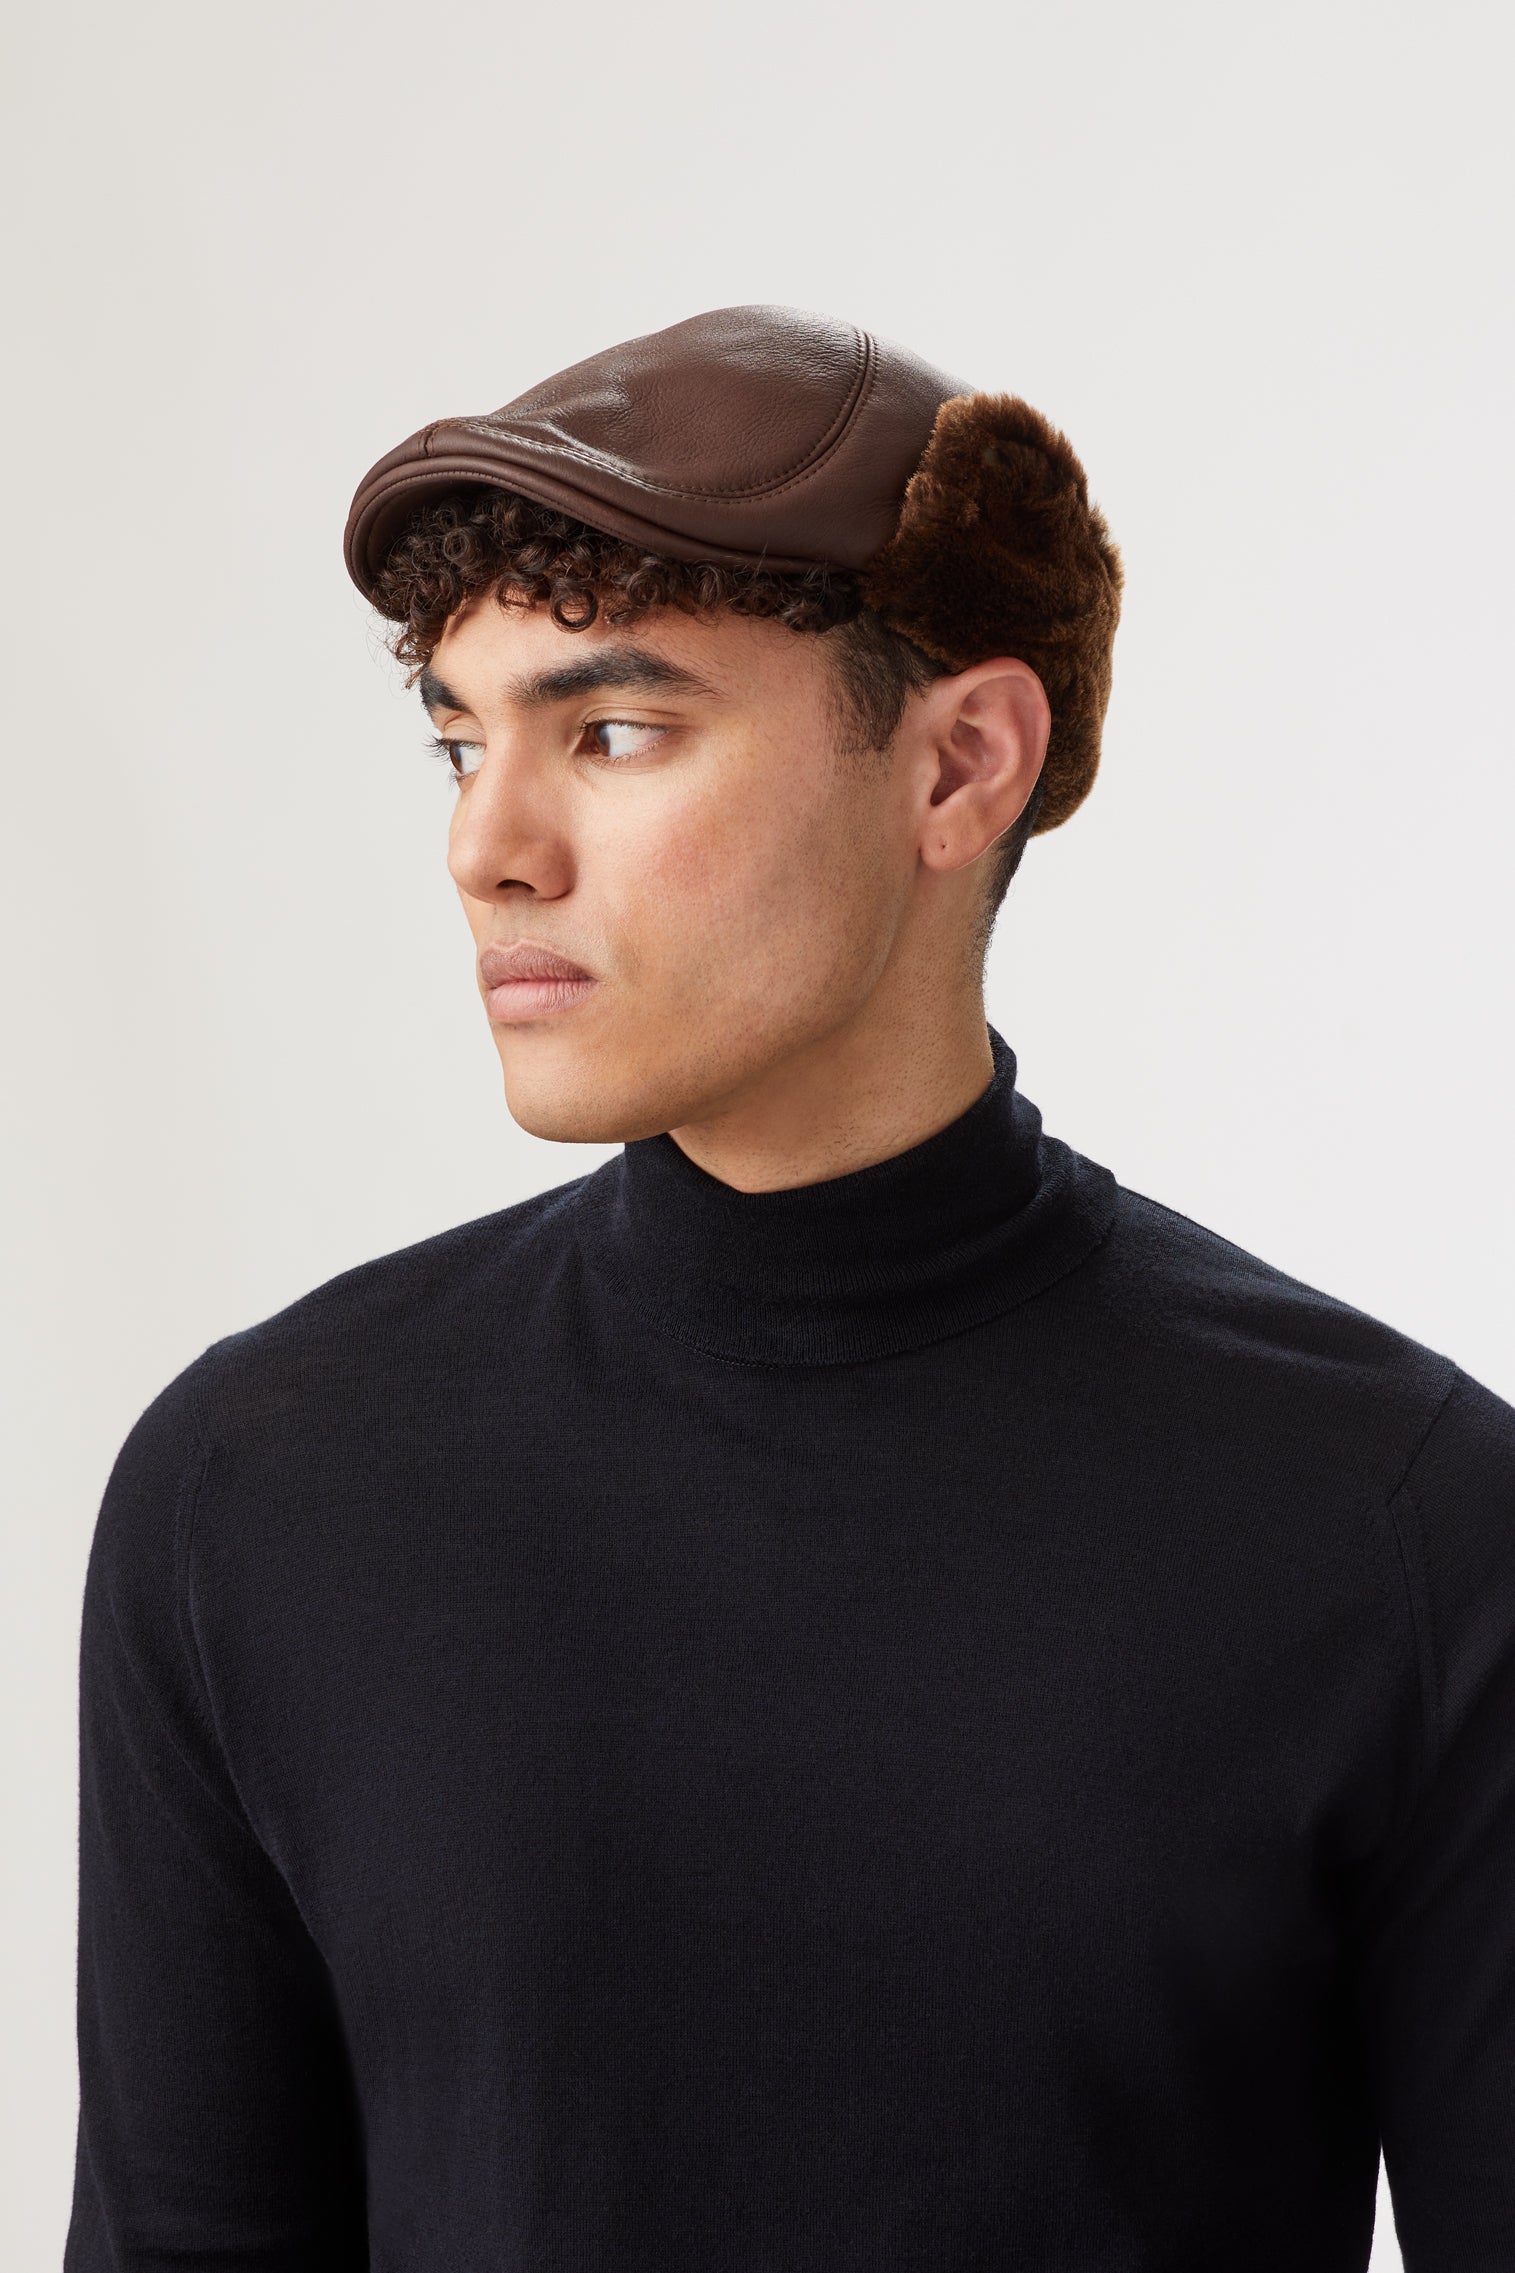 Alberta Leather Flat Cap - Hats with Ear Flaps - Lock & Co. Hatters London UK